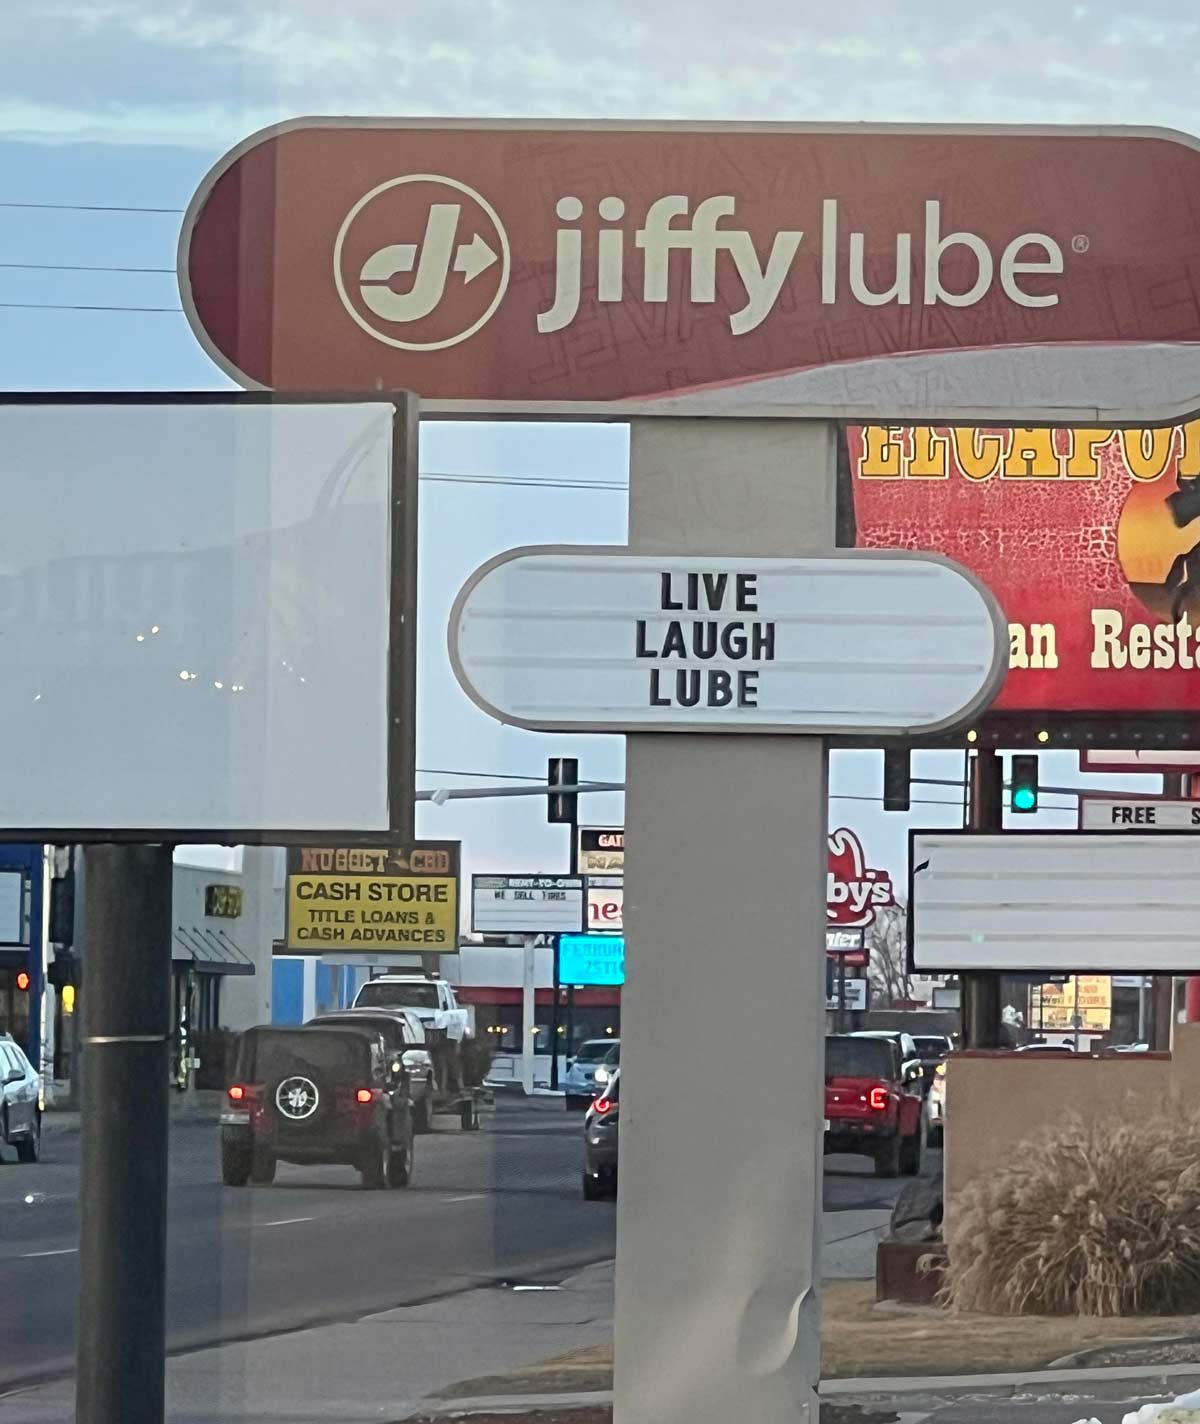 My local Jiffy Lube